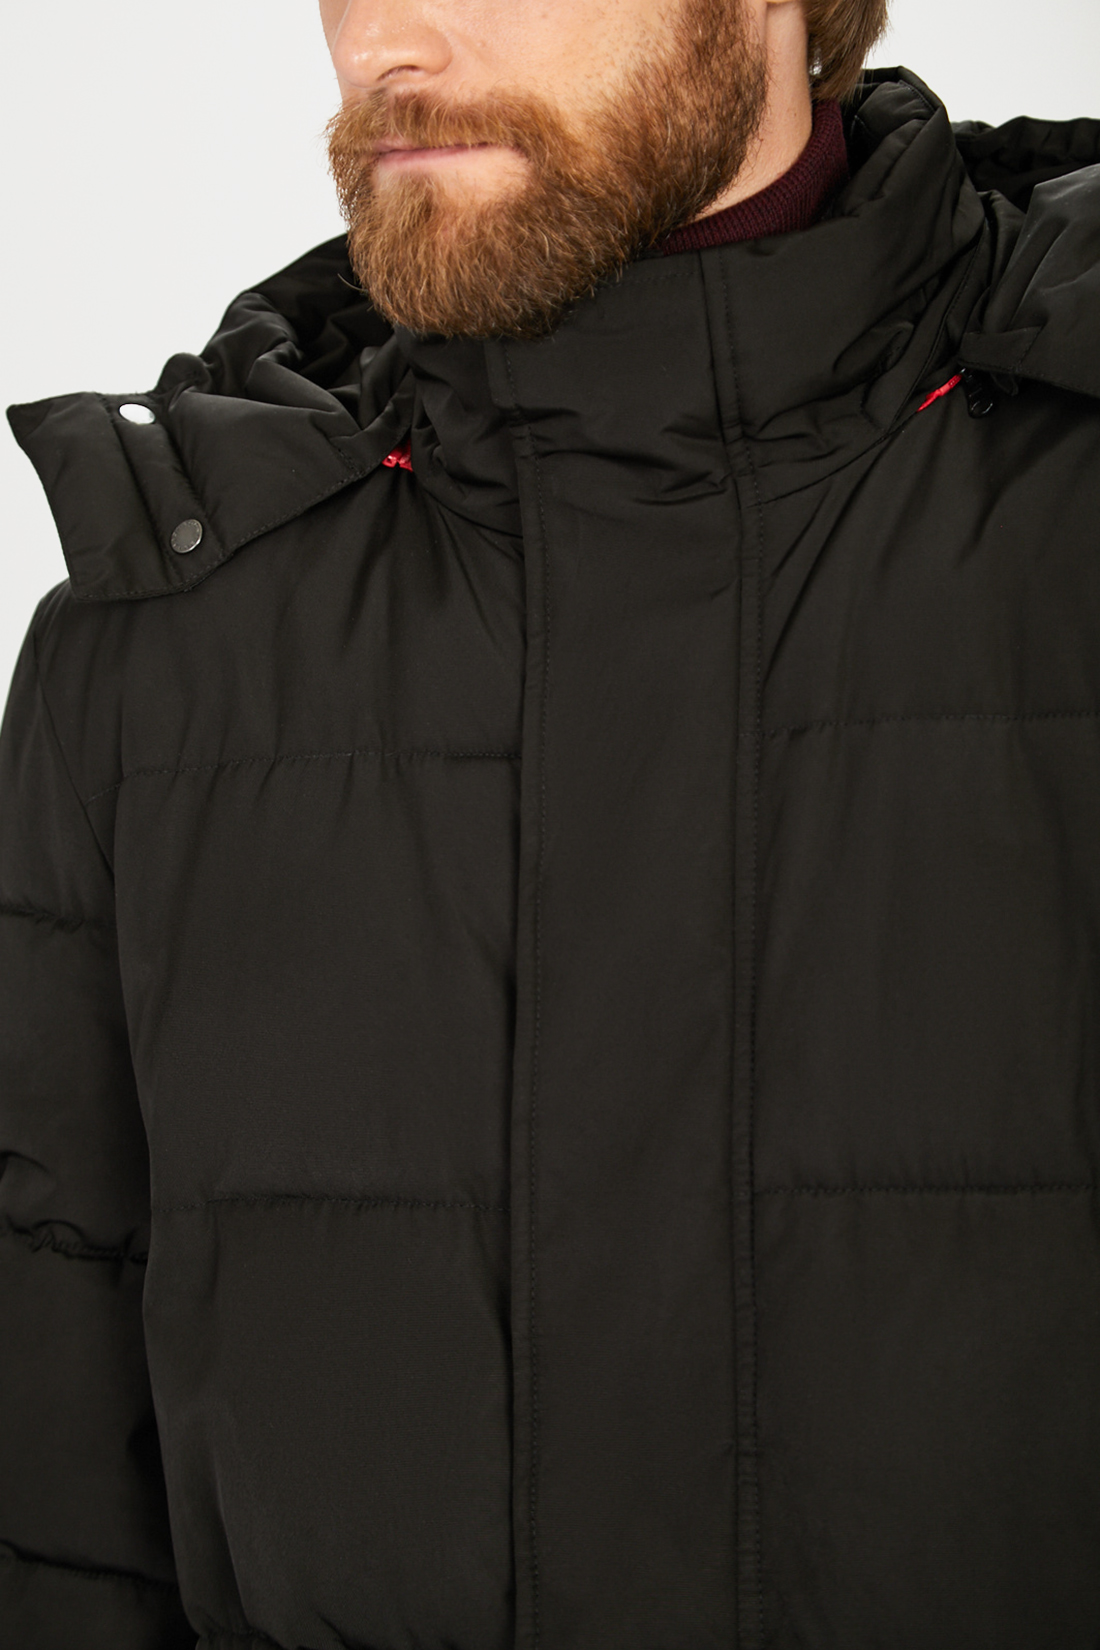 Куртка (Эко пух) (арт. baon B541506), размер S, цвет черный Куртка (Эко пух) (арт. baon B541506) - фото 4